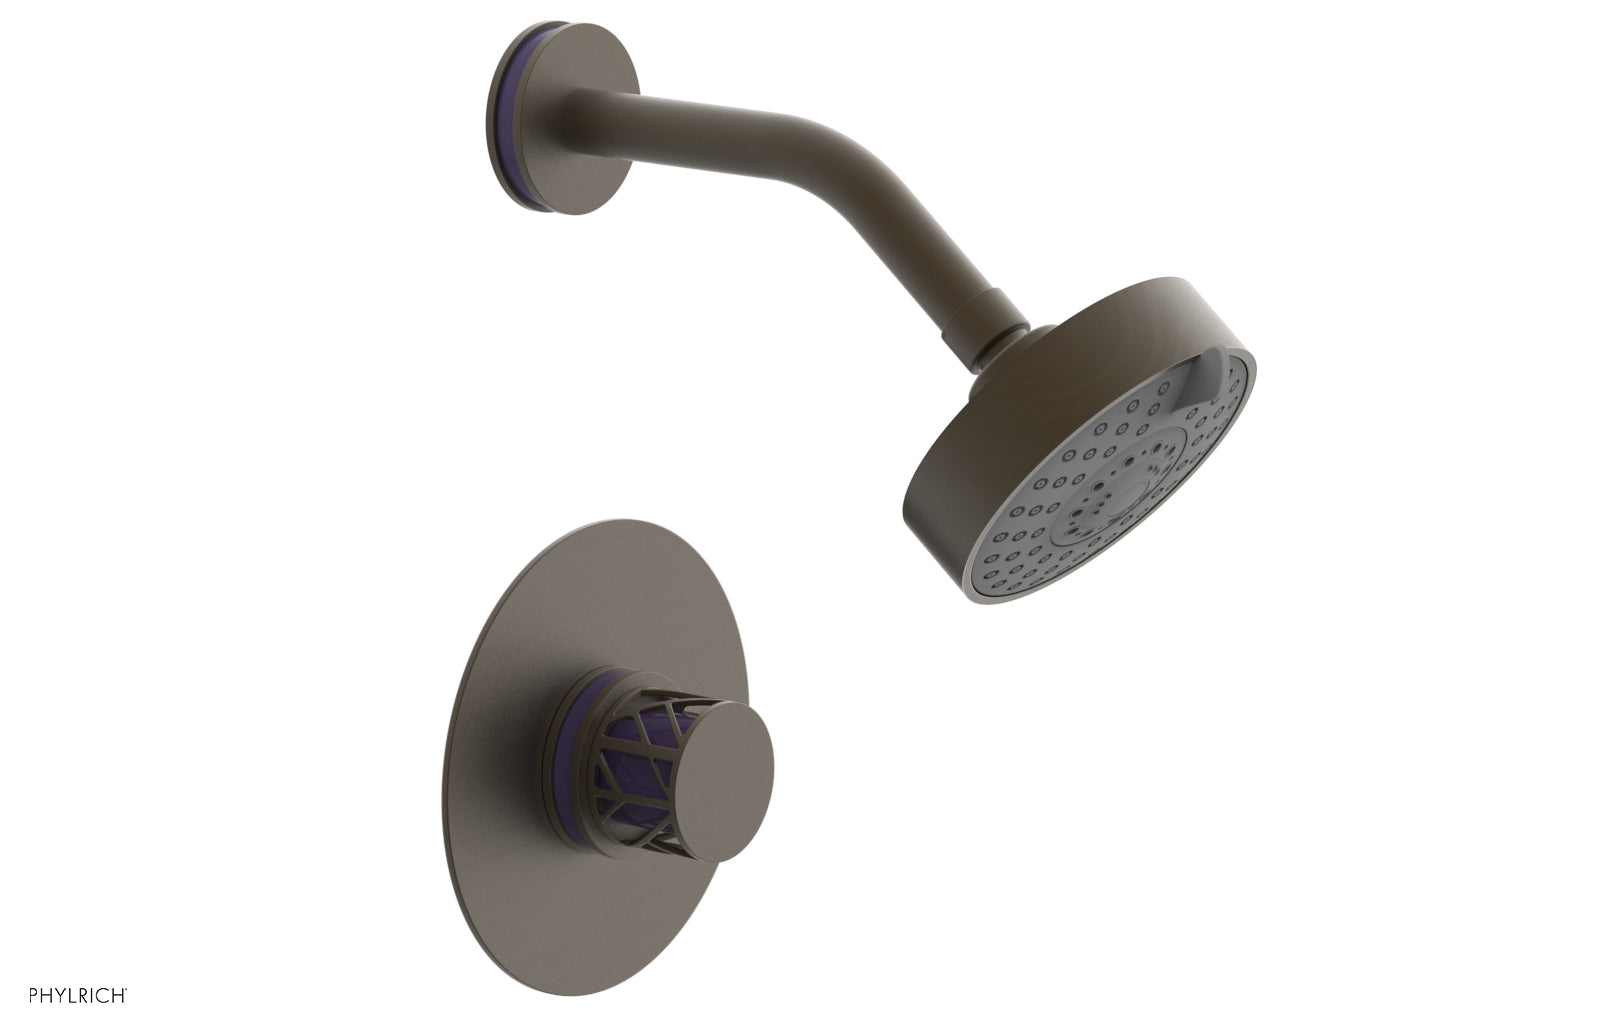 Phylrich JOLIE Pressure Balance Shower Set - Round Handle with "Purple" Accents